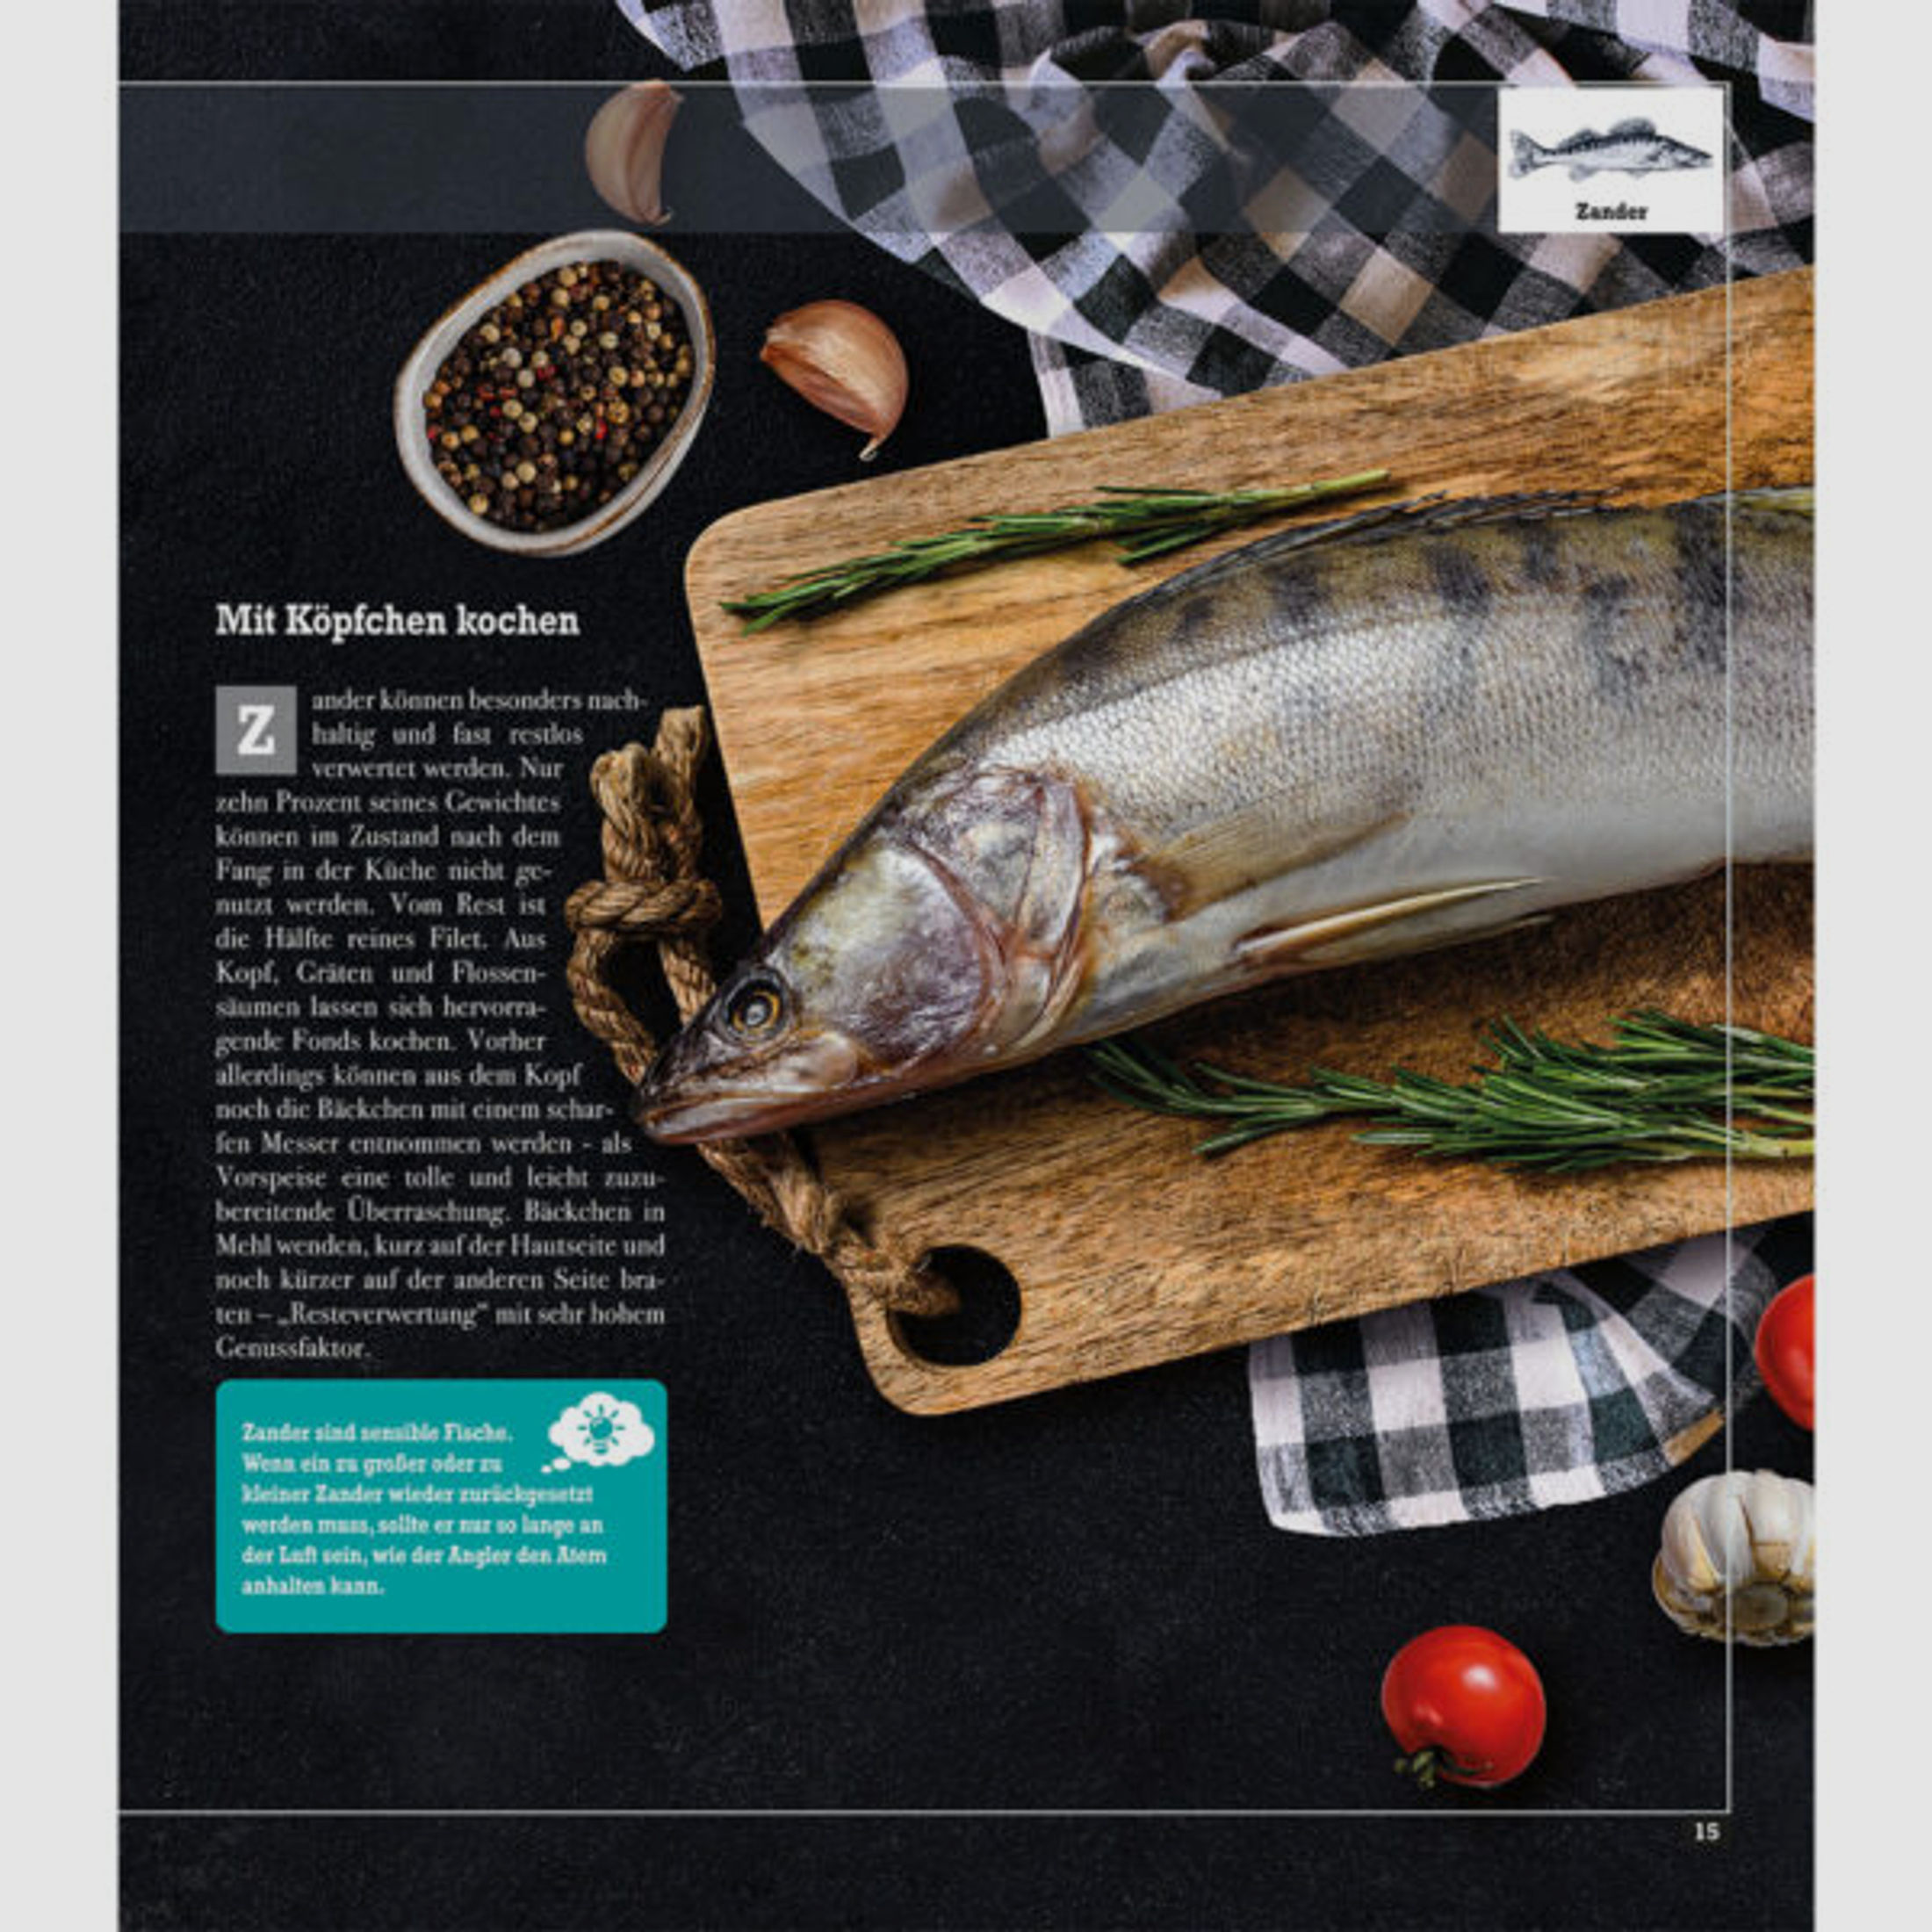 Liebetanz/Dänekas, Hook & Cook: angeln, kochen & genießen